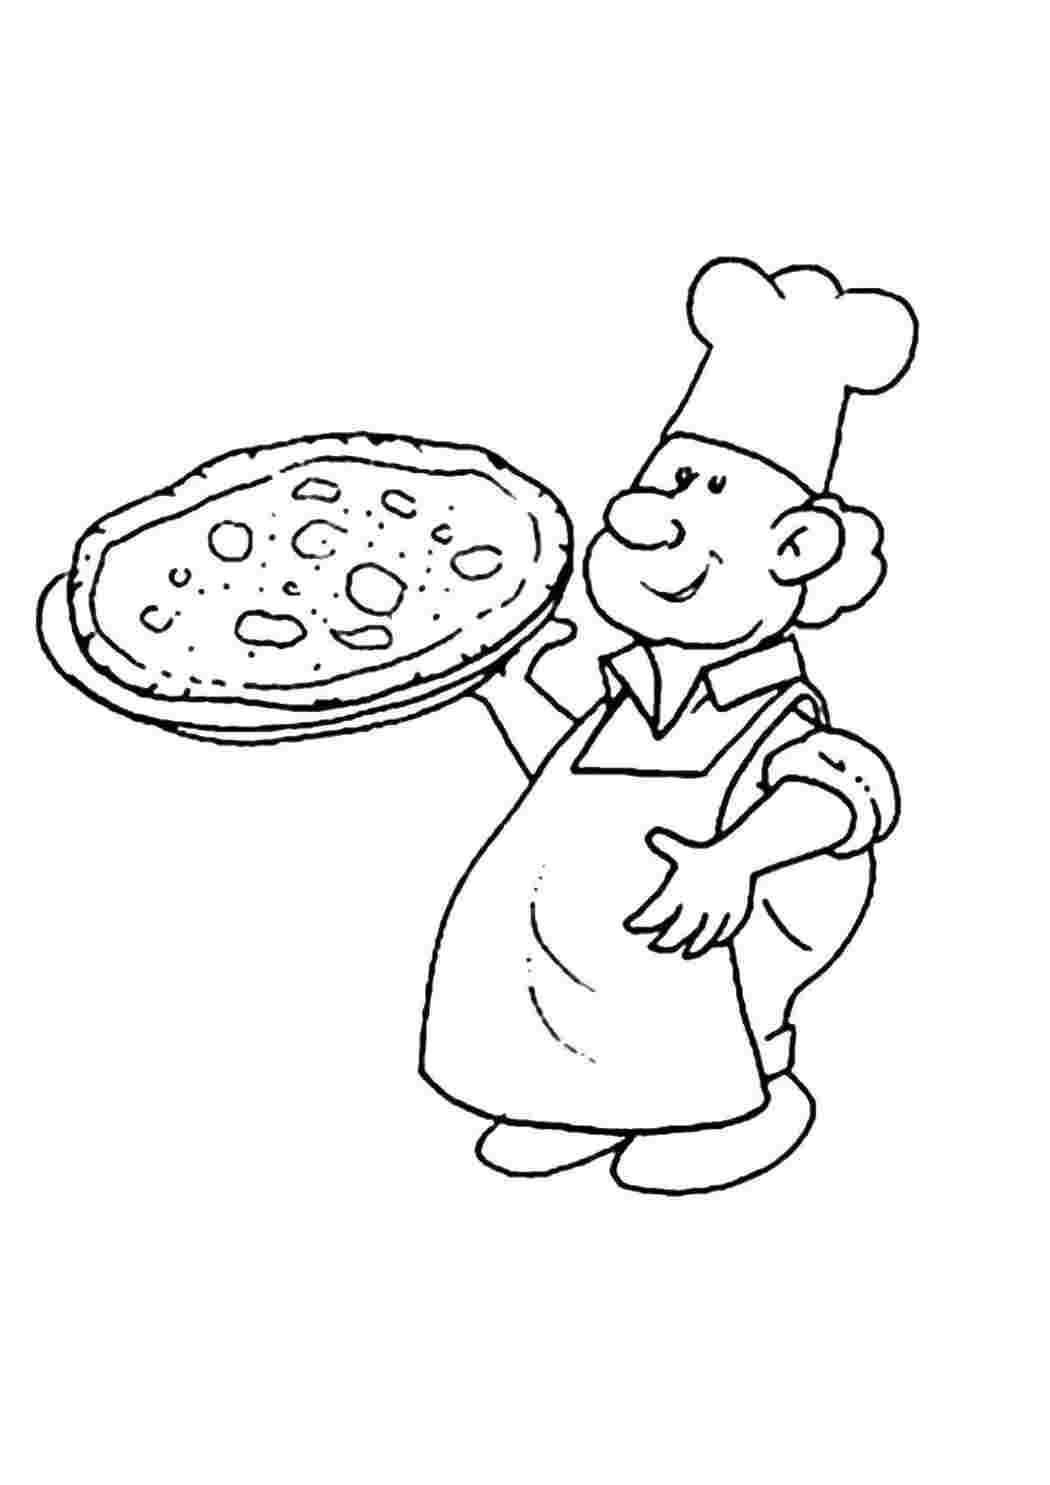 Раскраски Повар приготовил пиццу профессии профессии, повар, пицца